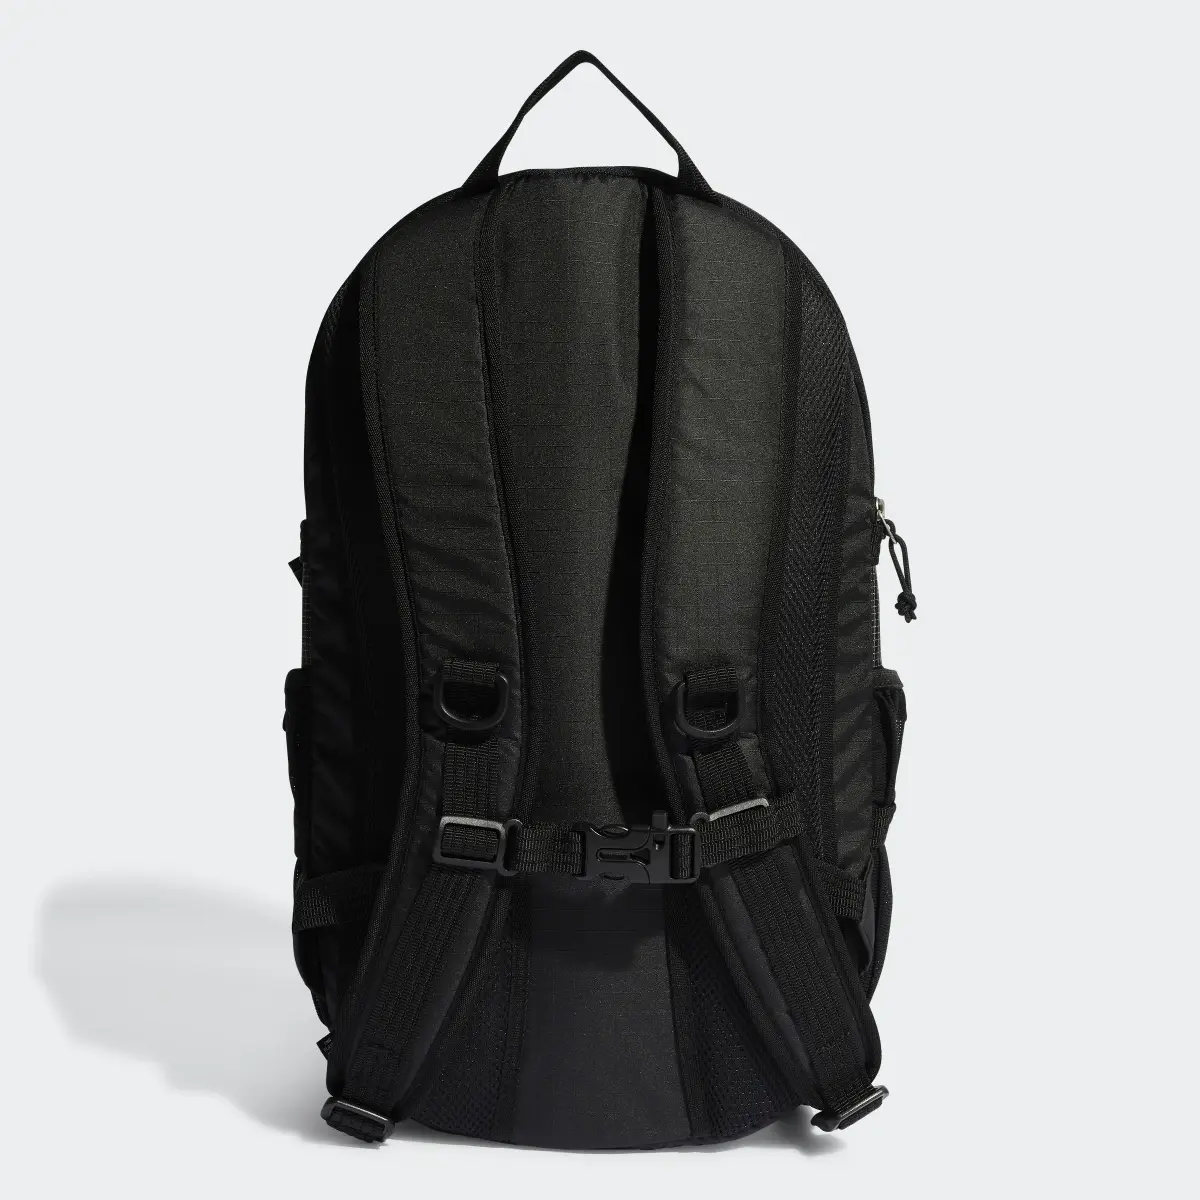 Adidas Adventure Backpack Large. 3